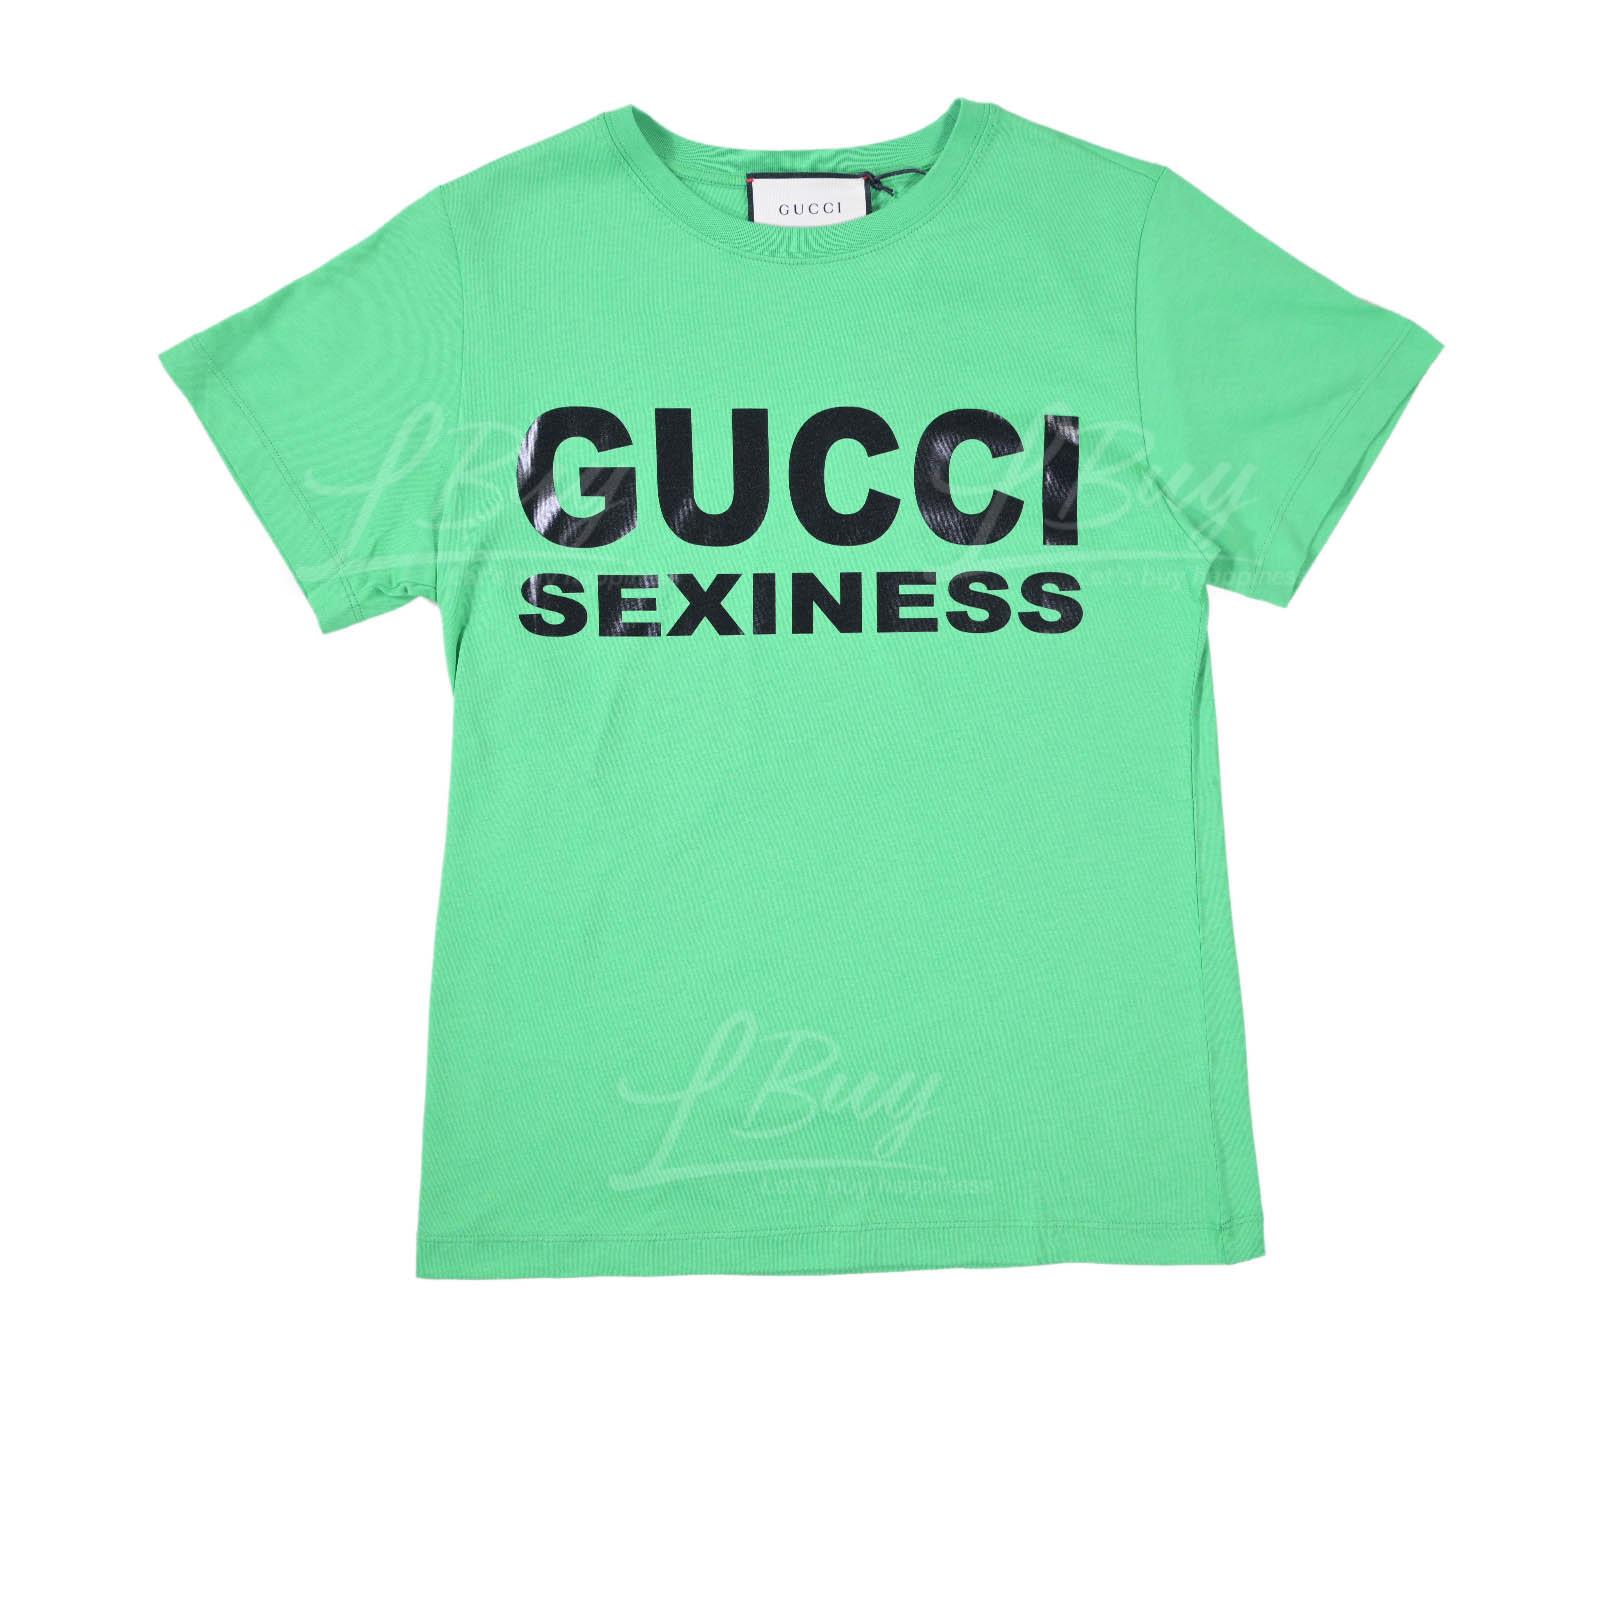 Gucci Sexiness 短袖T恤 绿色